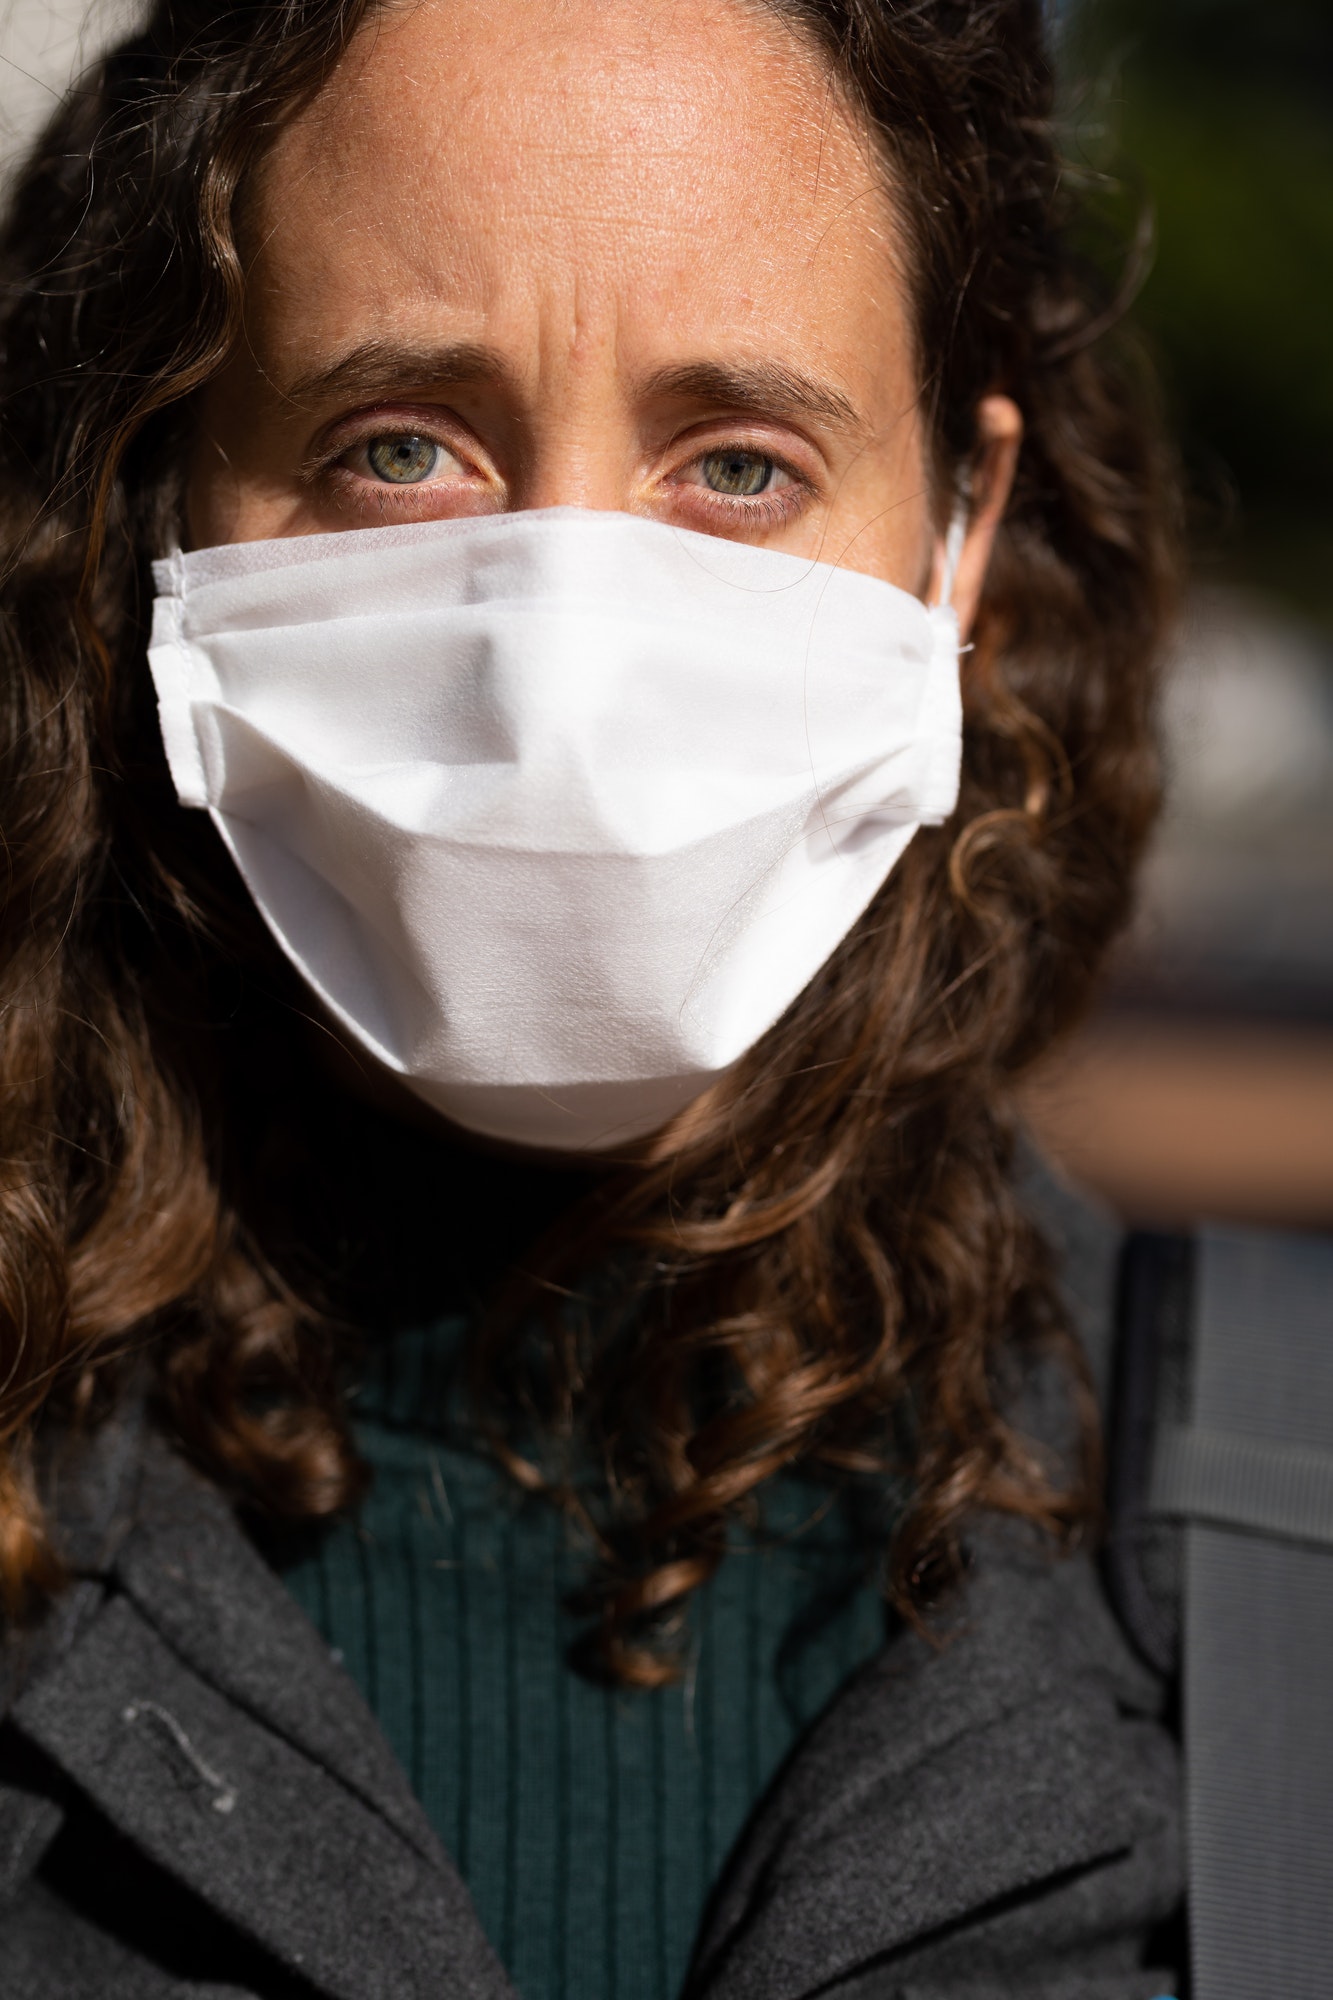 Caucasian woman wearing a protective mask against coronavirus